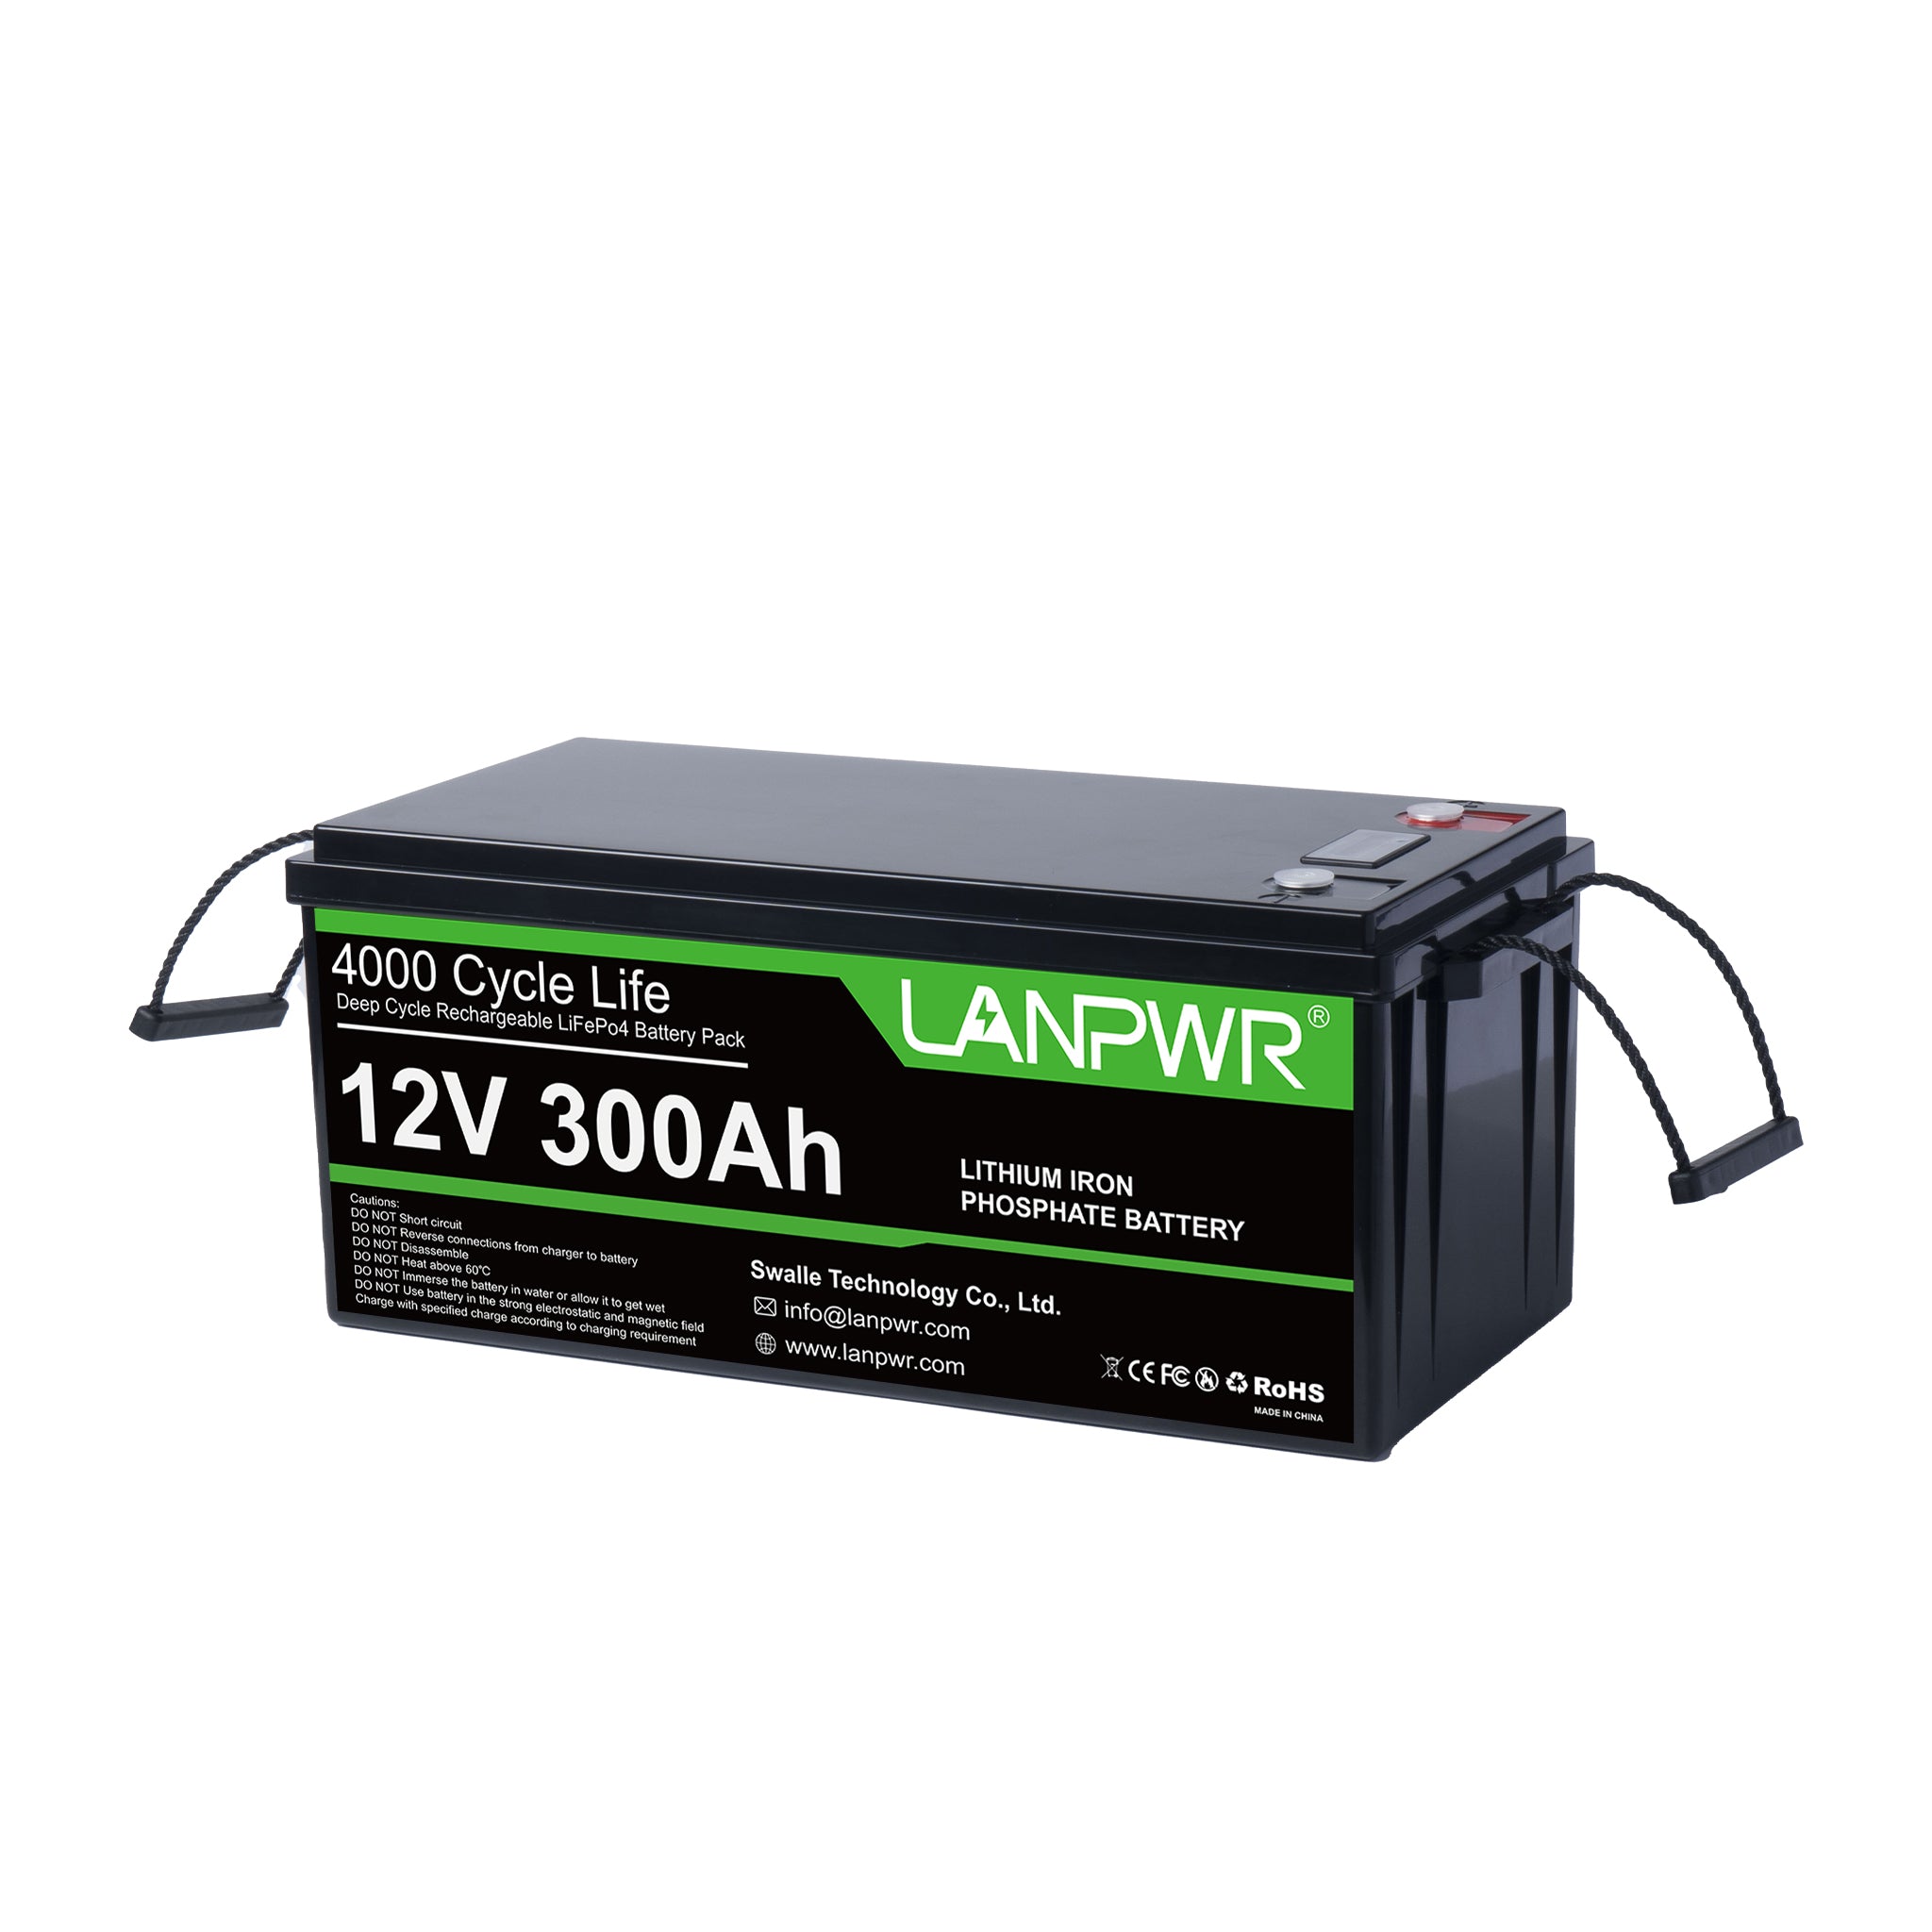 【Final Price €712.50】LANPWR 12V 300Ah LiFePO4 Battery, Maximum Load Power 2560W, 3840Wh Energy